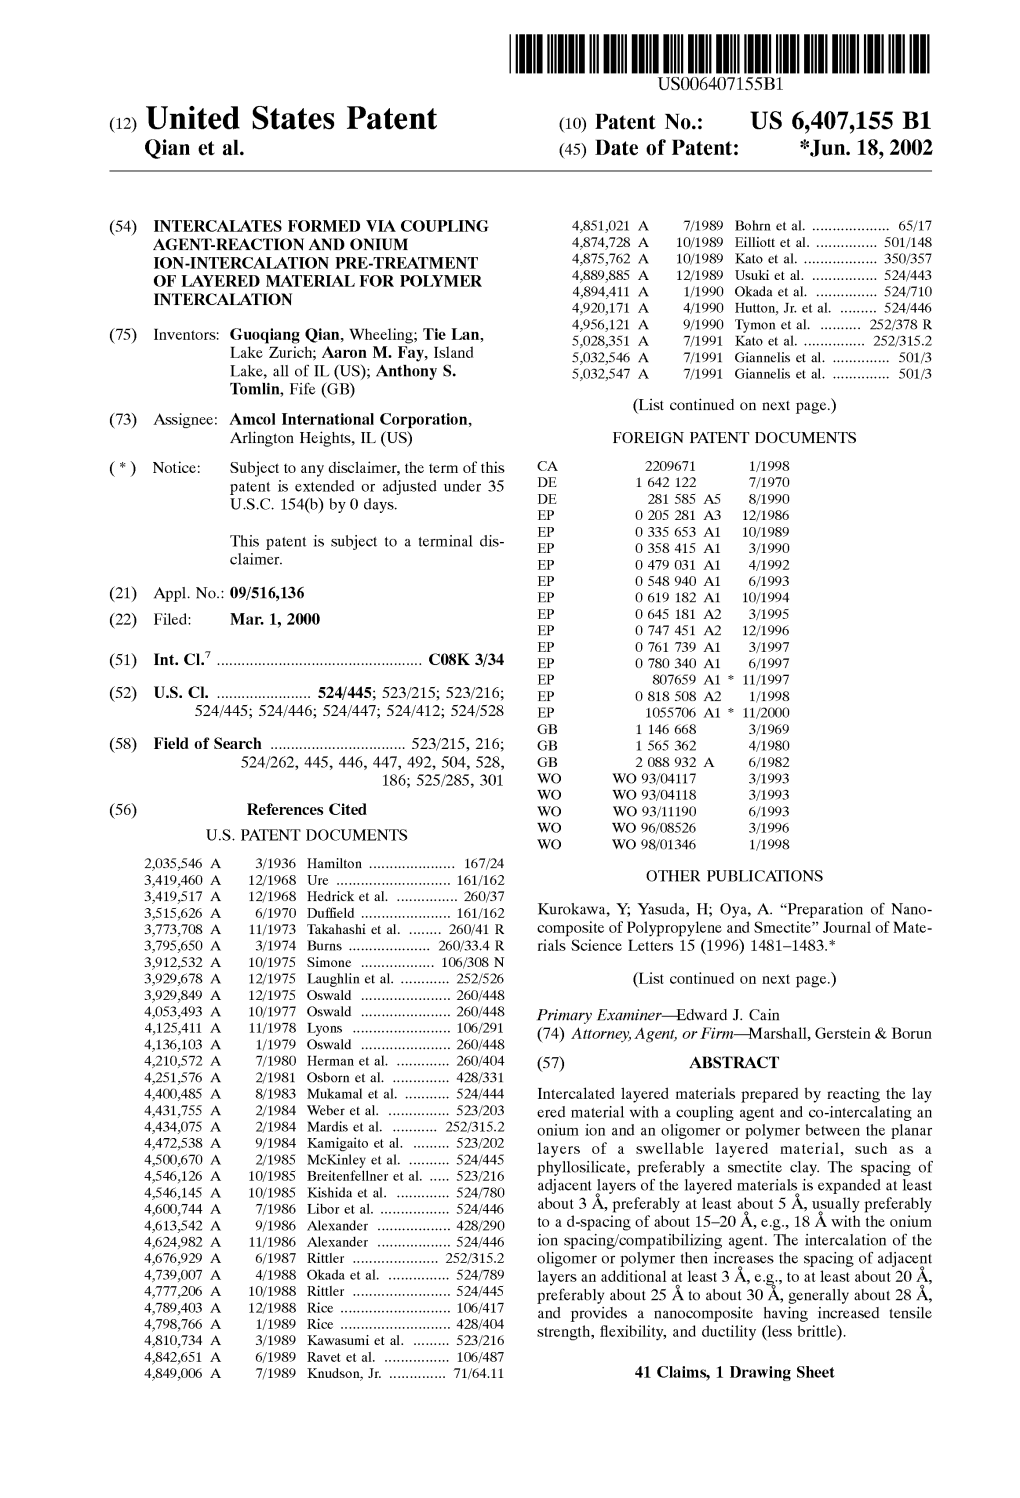 (12) United States Patent (10) Patent No.: US 6,407,155 B1 Qian Et Al